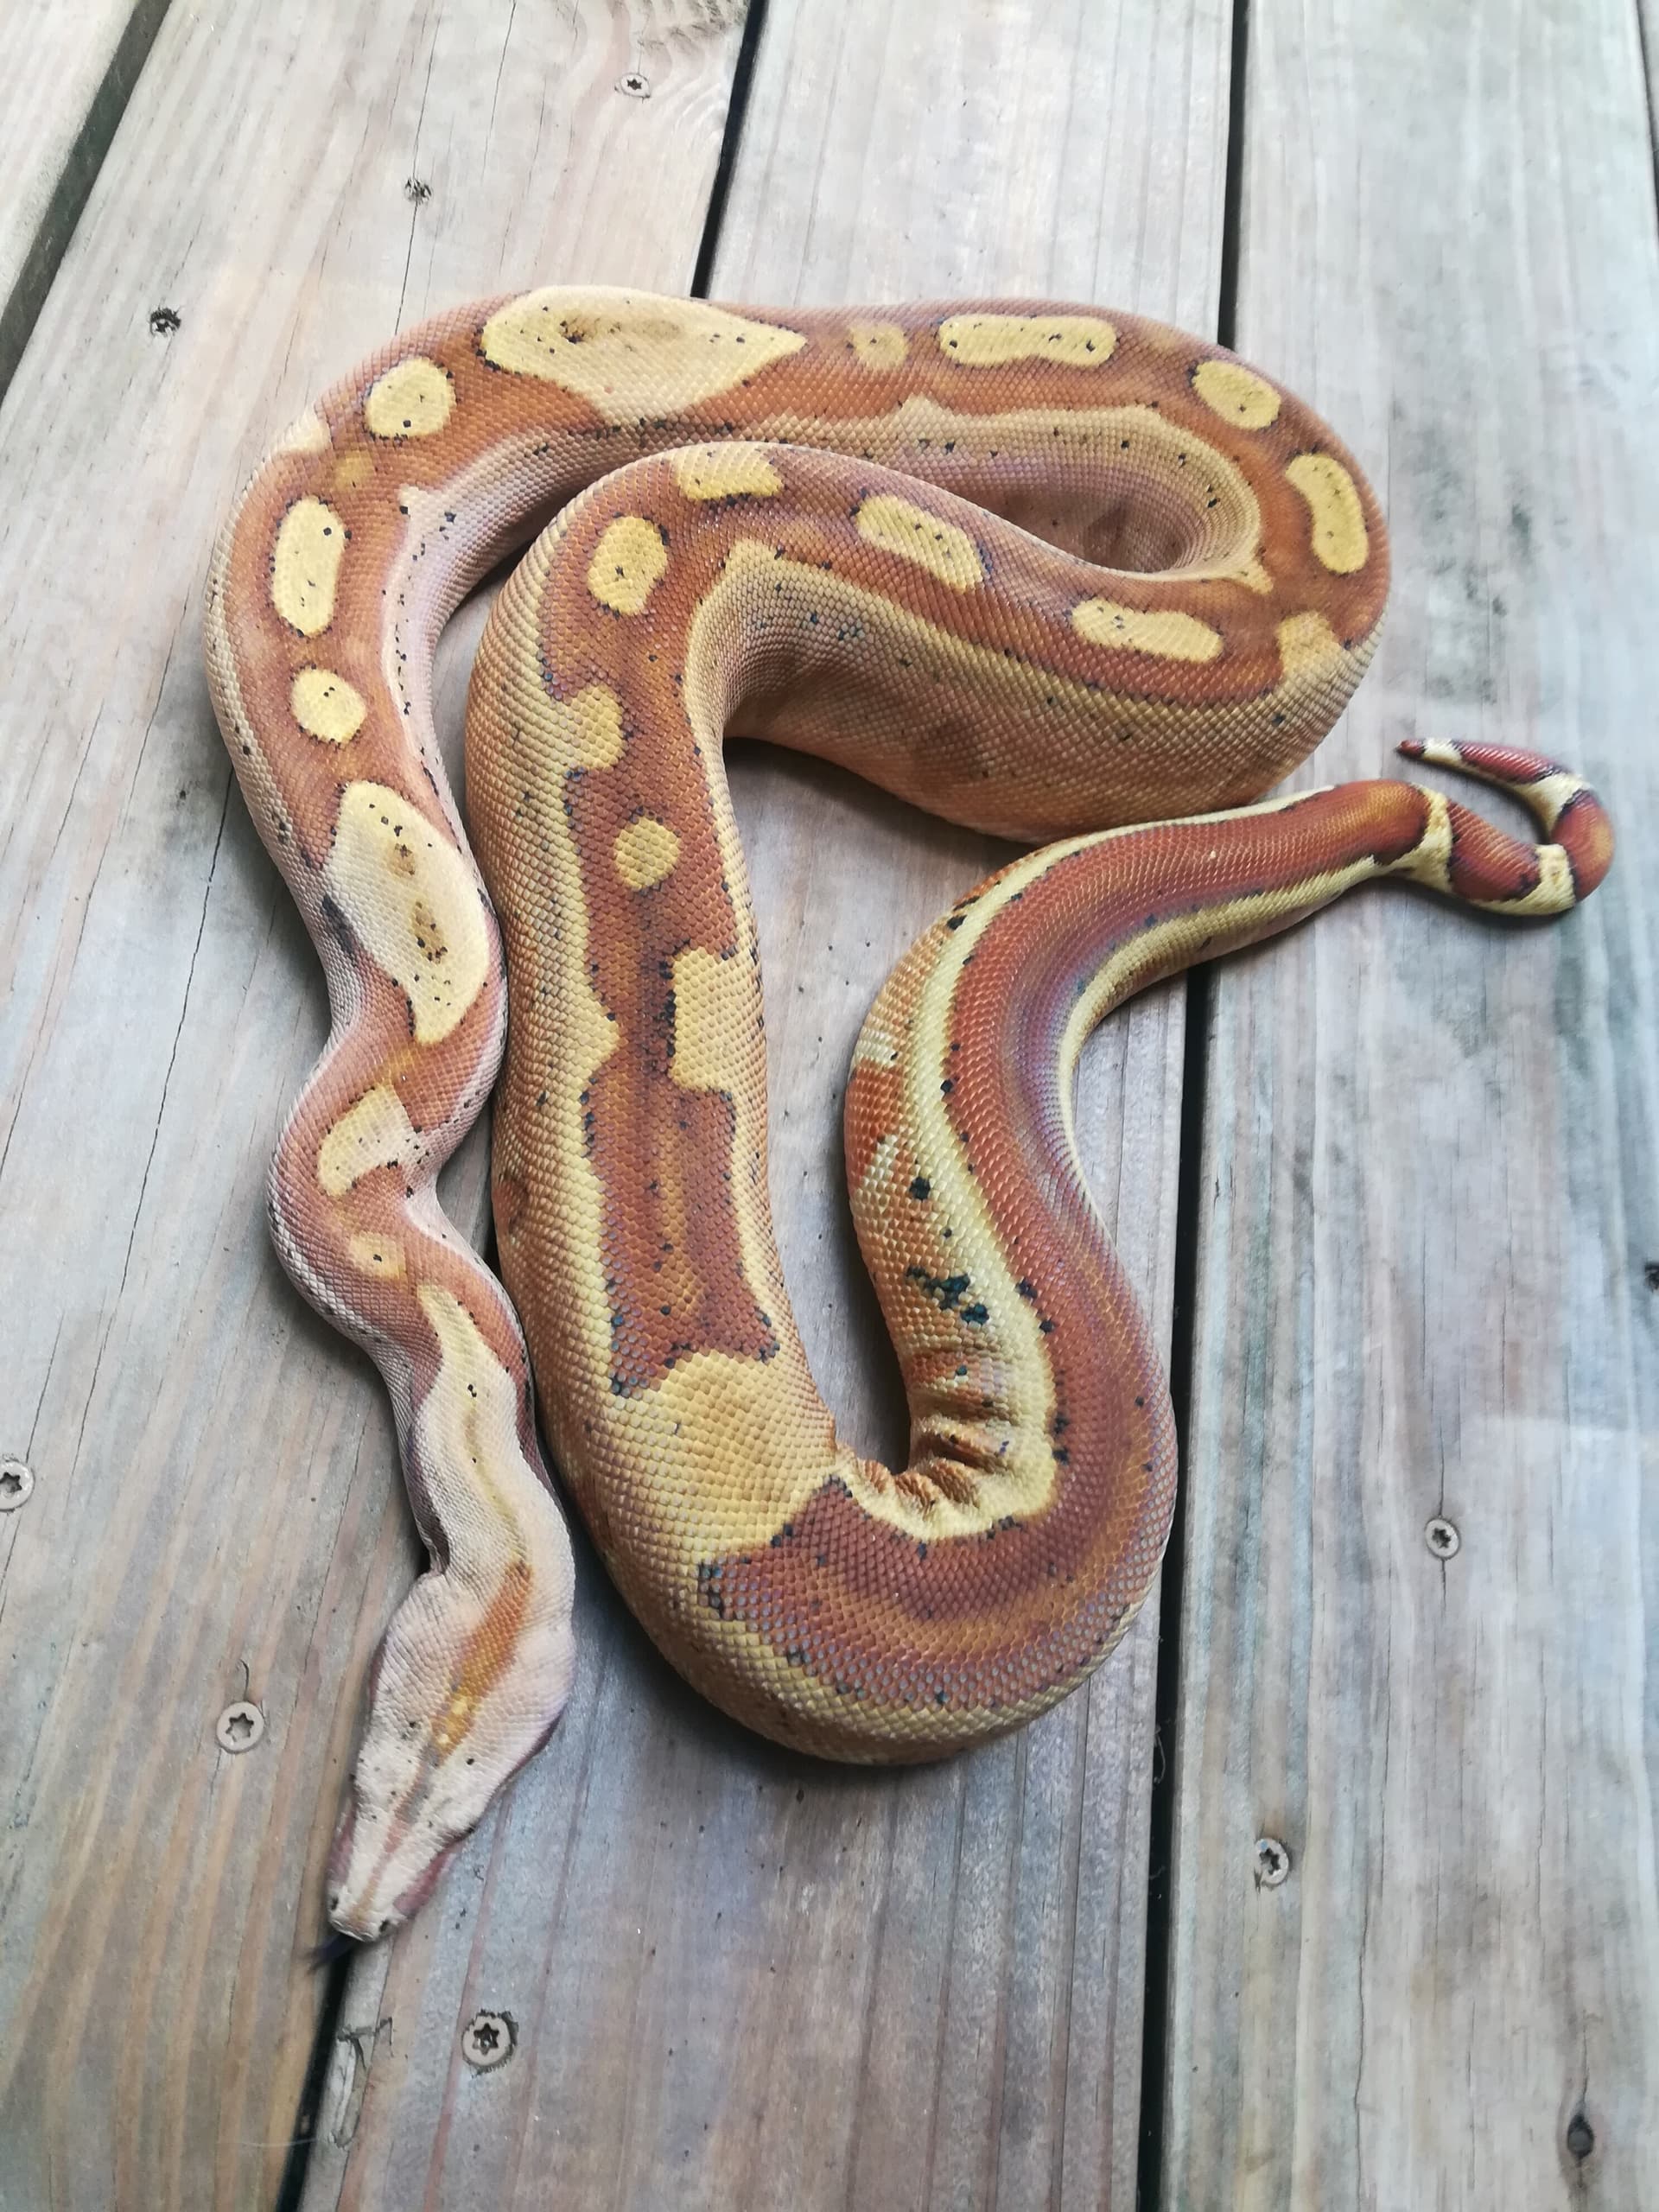 Boa Constrictor developing white spots in color? - Boa Constrictors -  MorphMarket Reptile Community